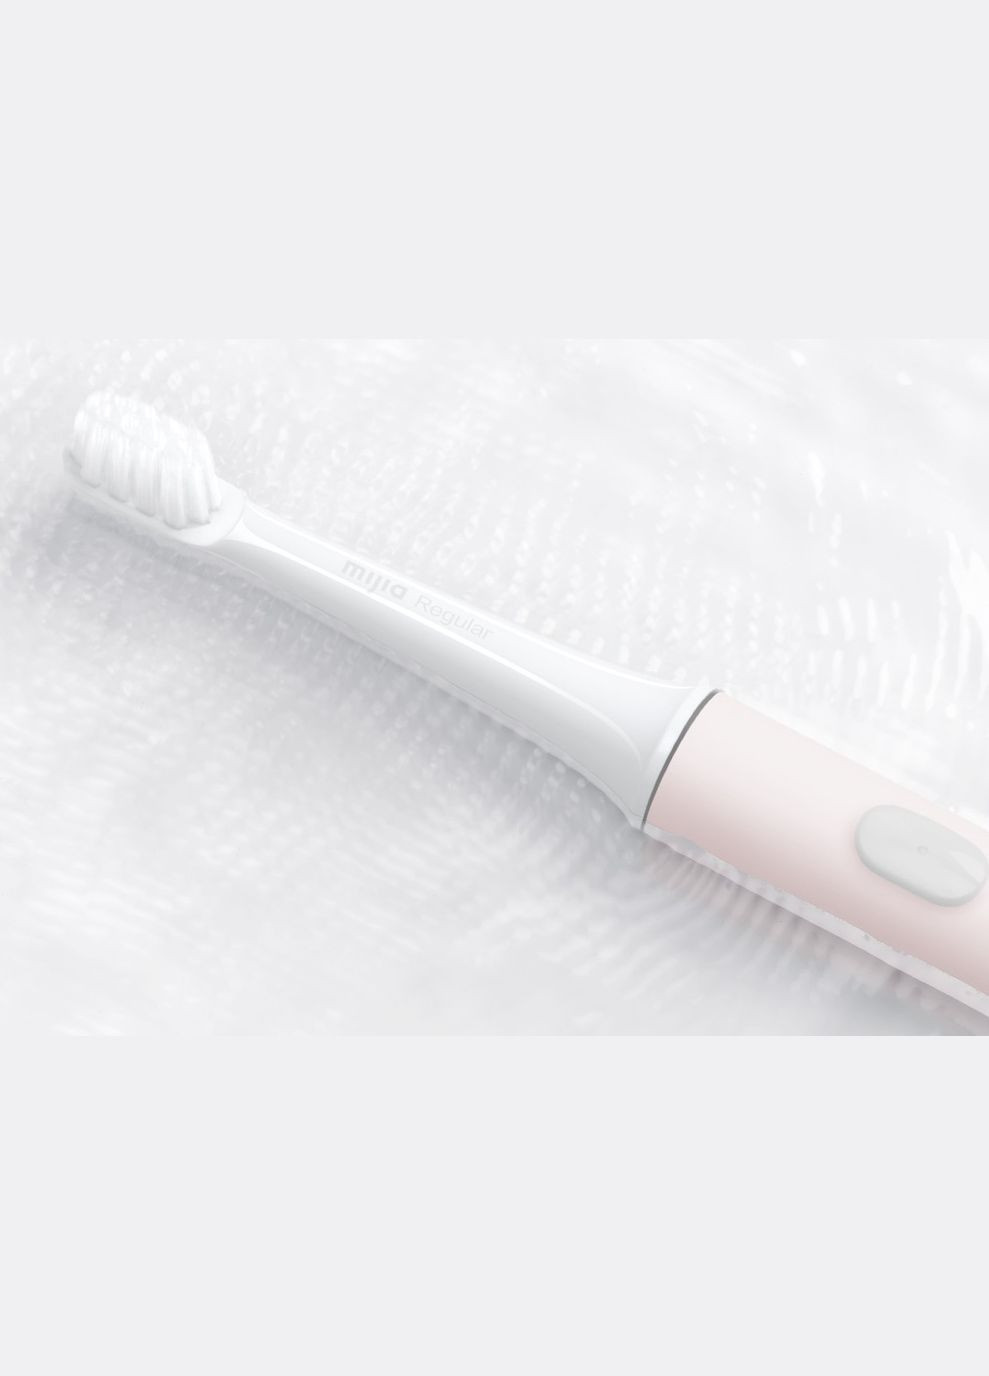 Електрична зубна щітка Xiao Electric Toothbrush T100 Pink (NUN4096CN) MI (268225582)